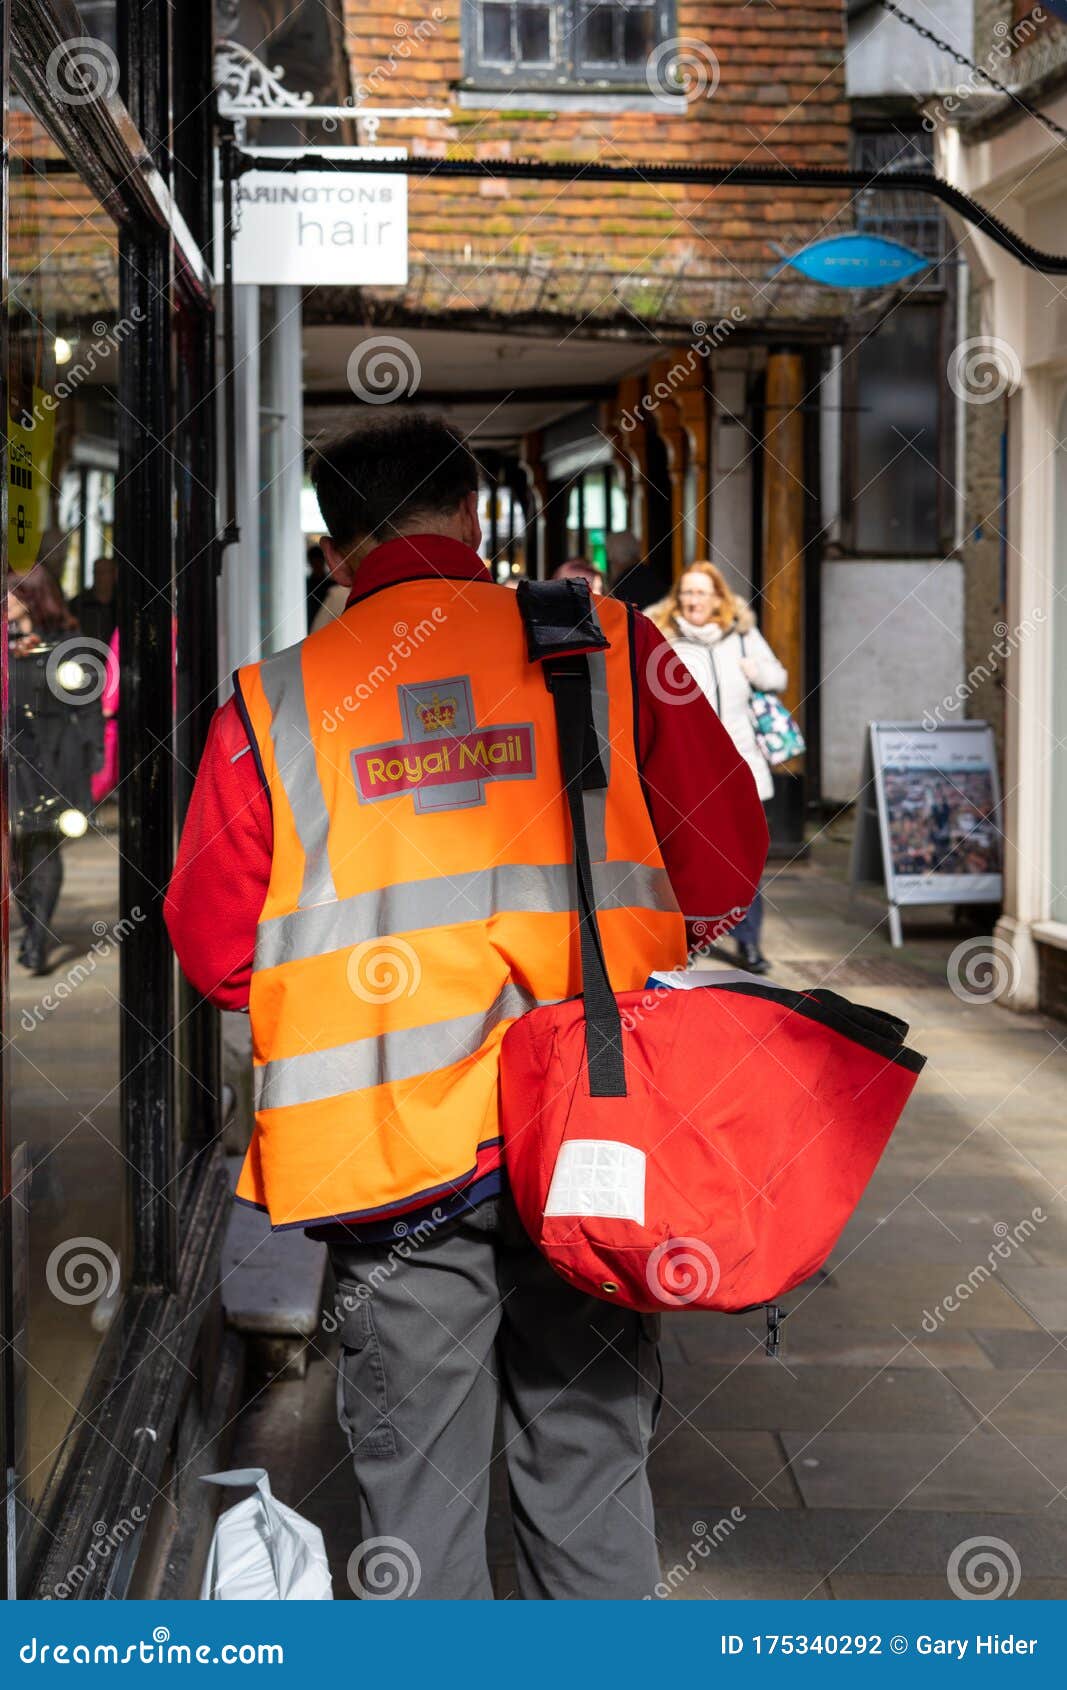 Royal mail postman jobs in derby